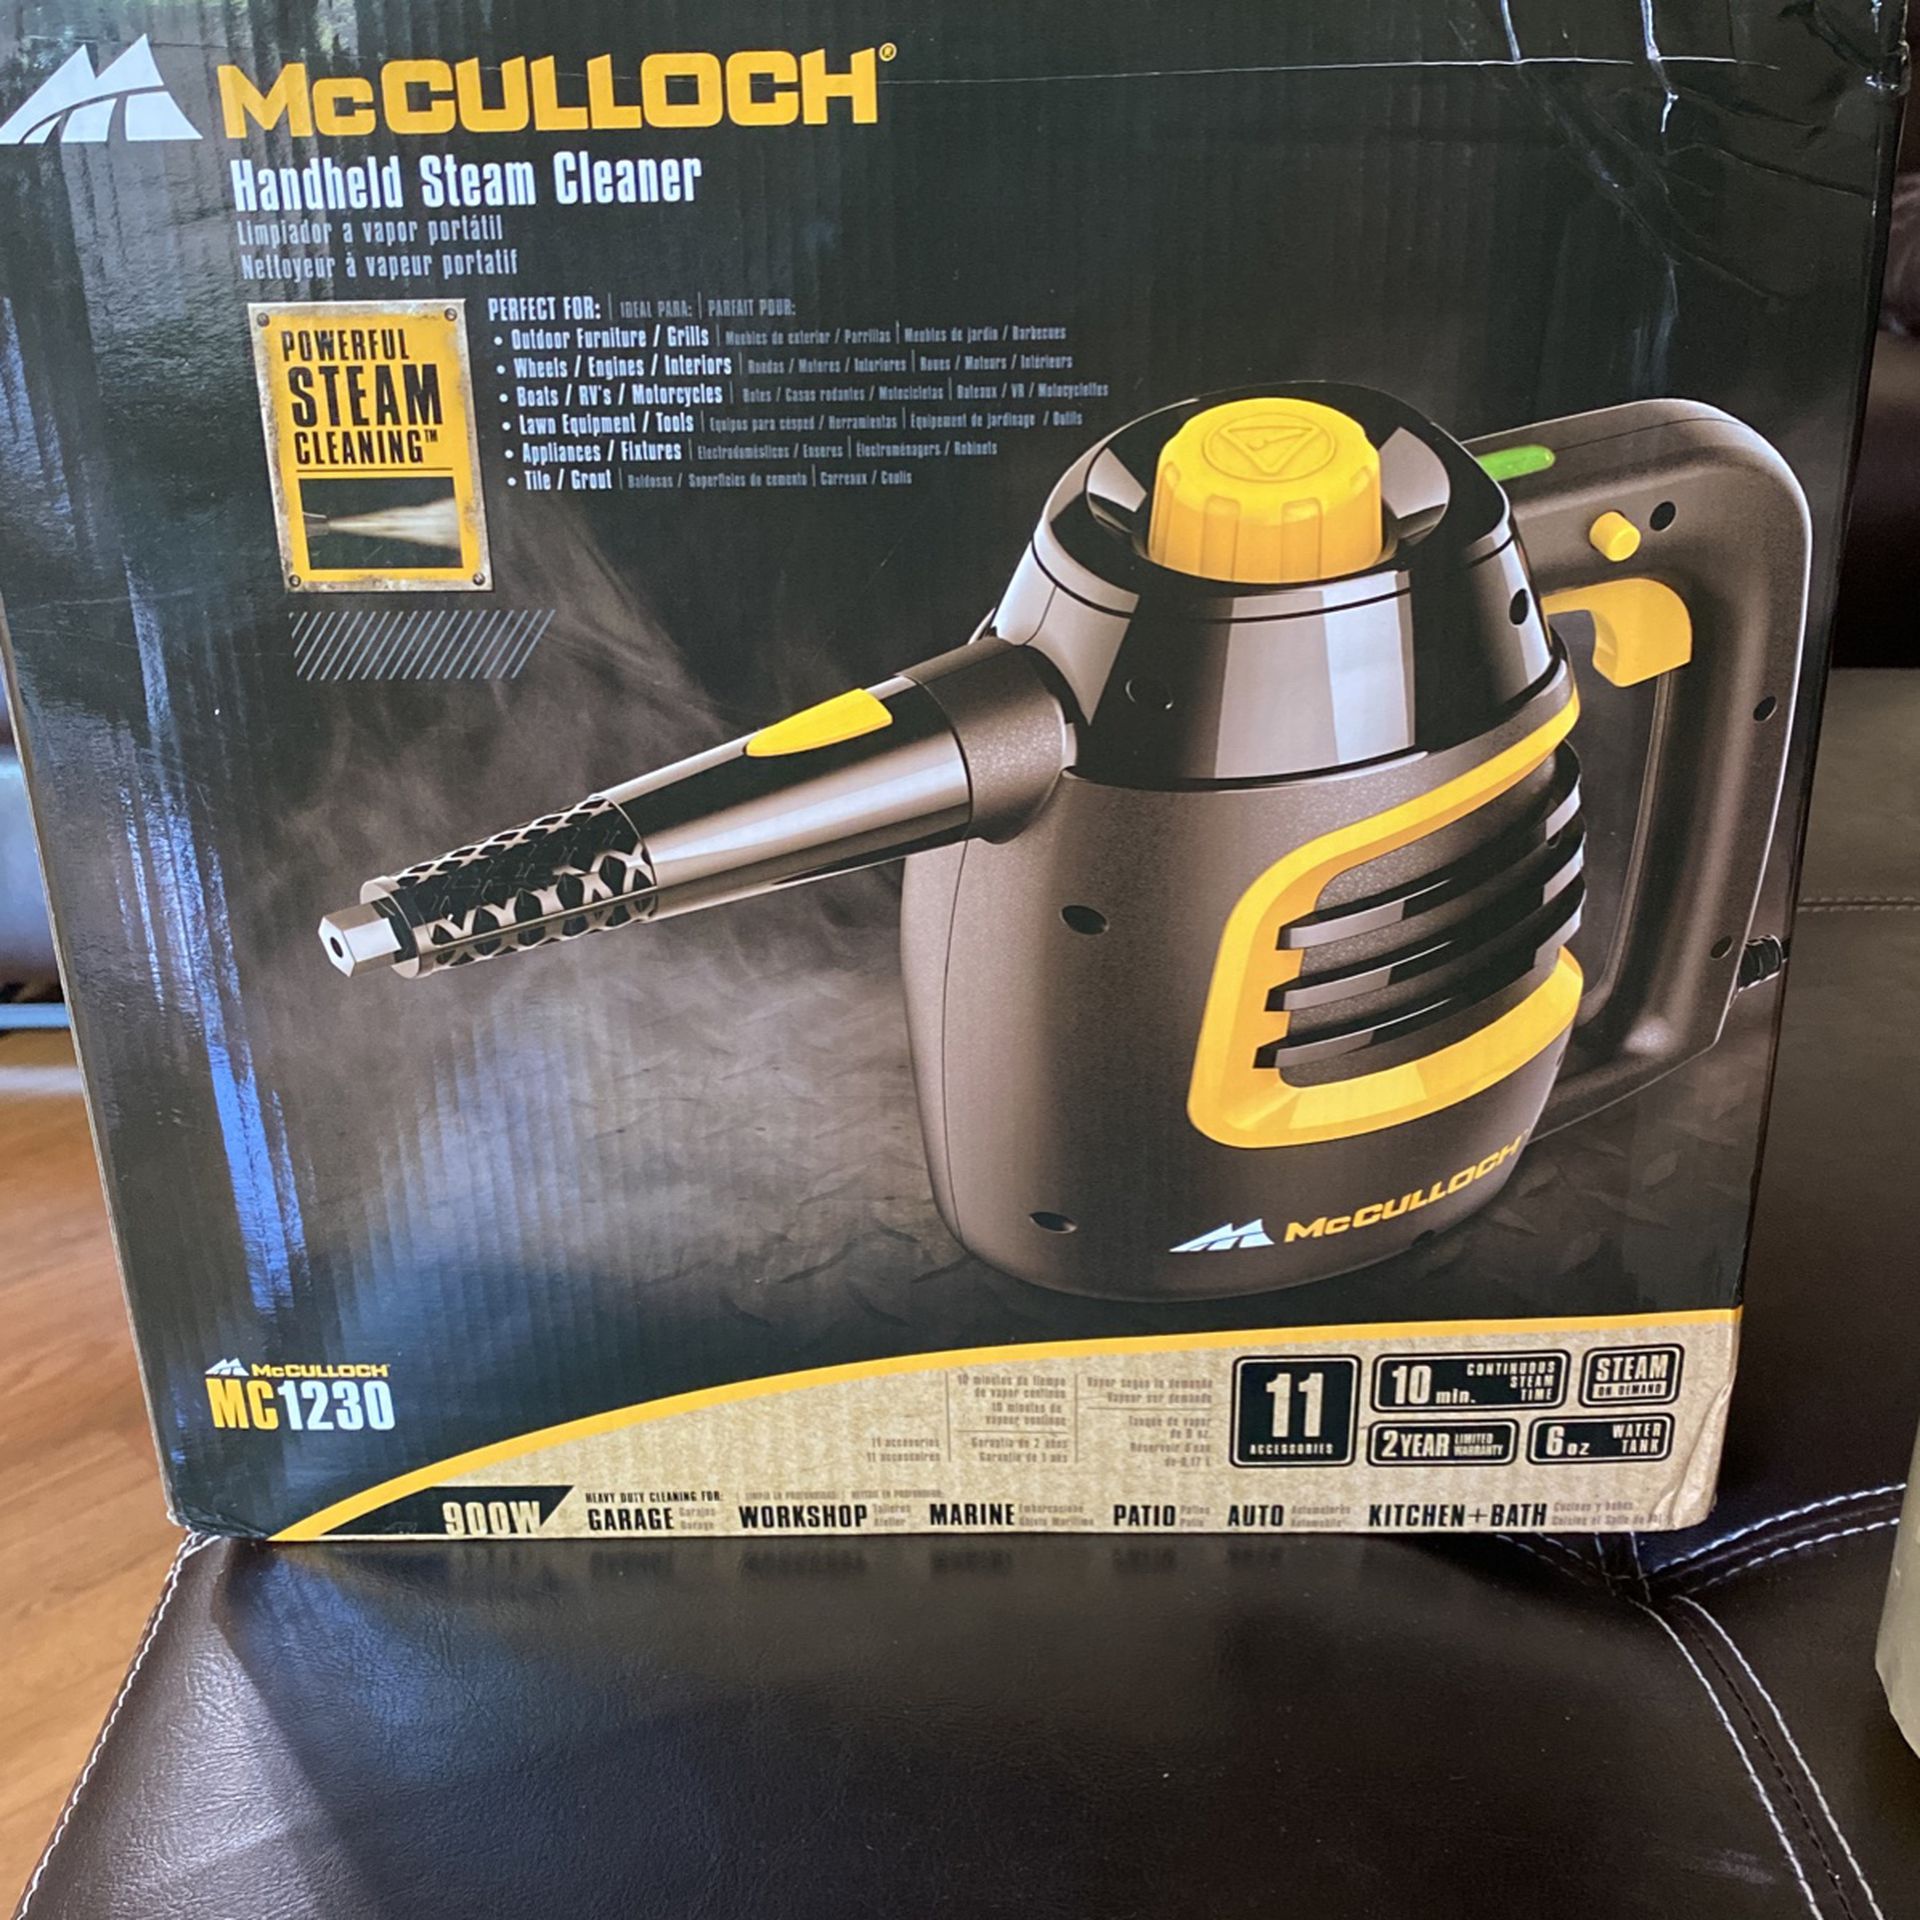 McCulloch Handheld Steam Cleaner